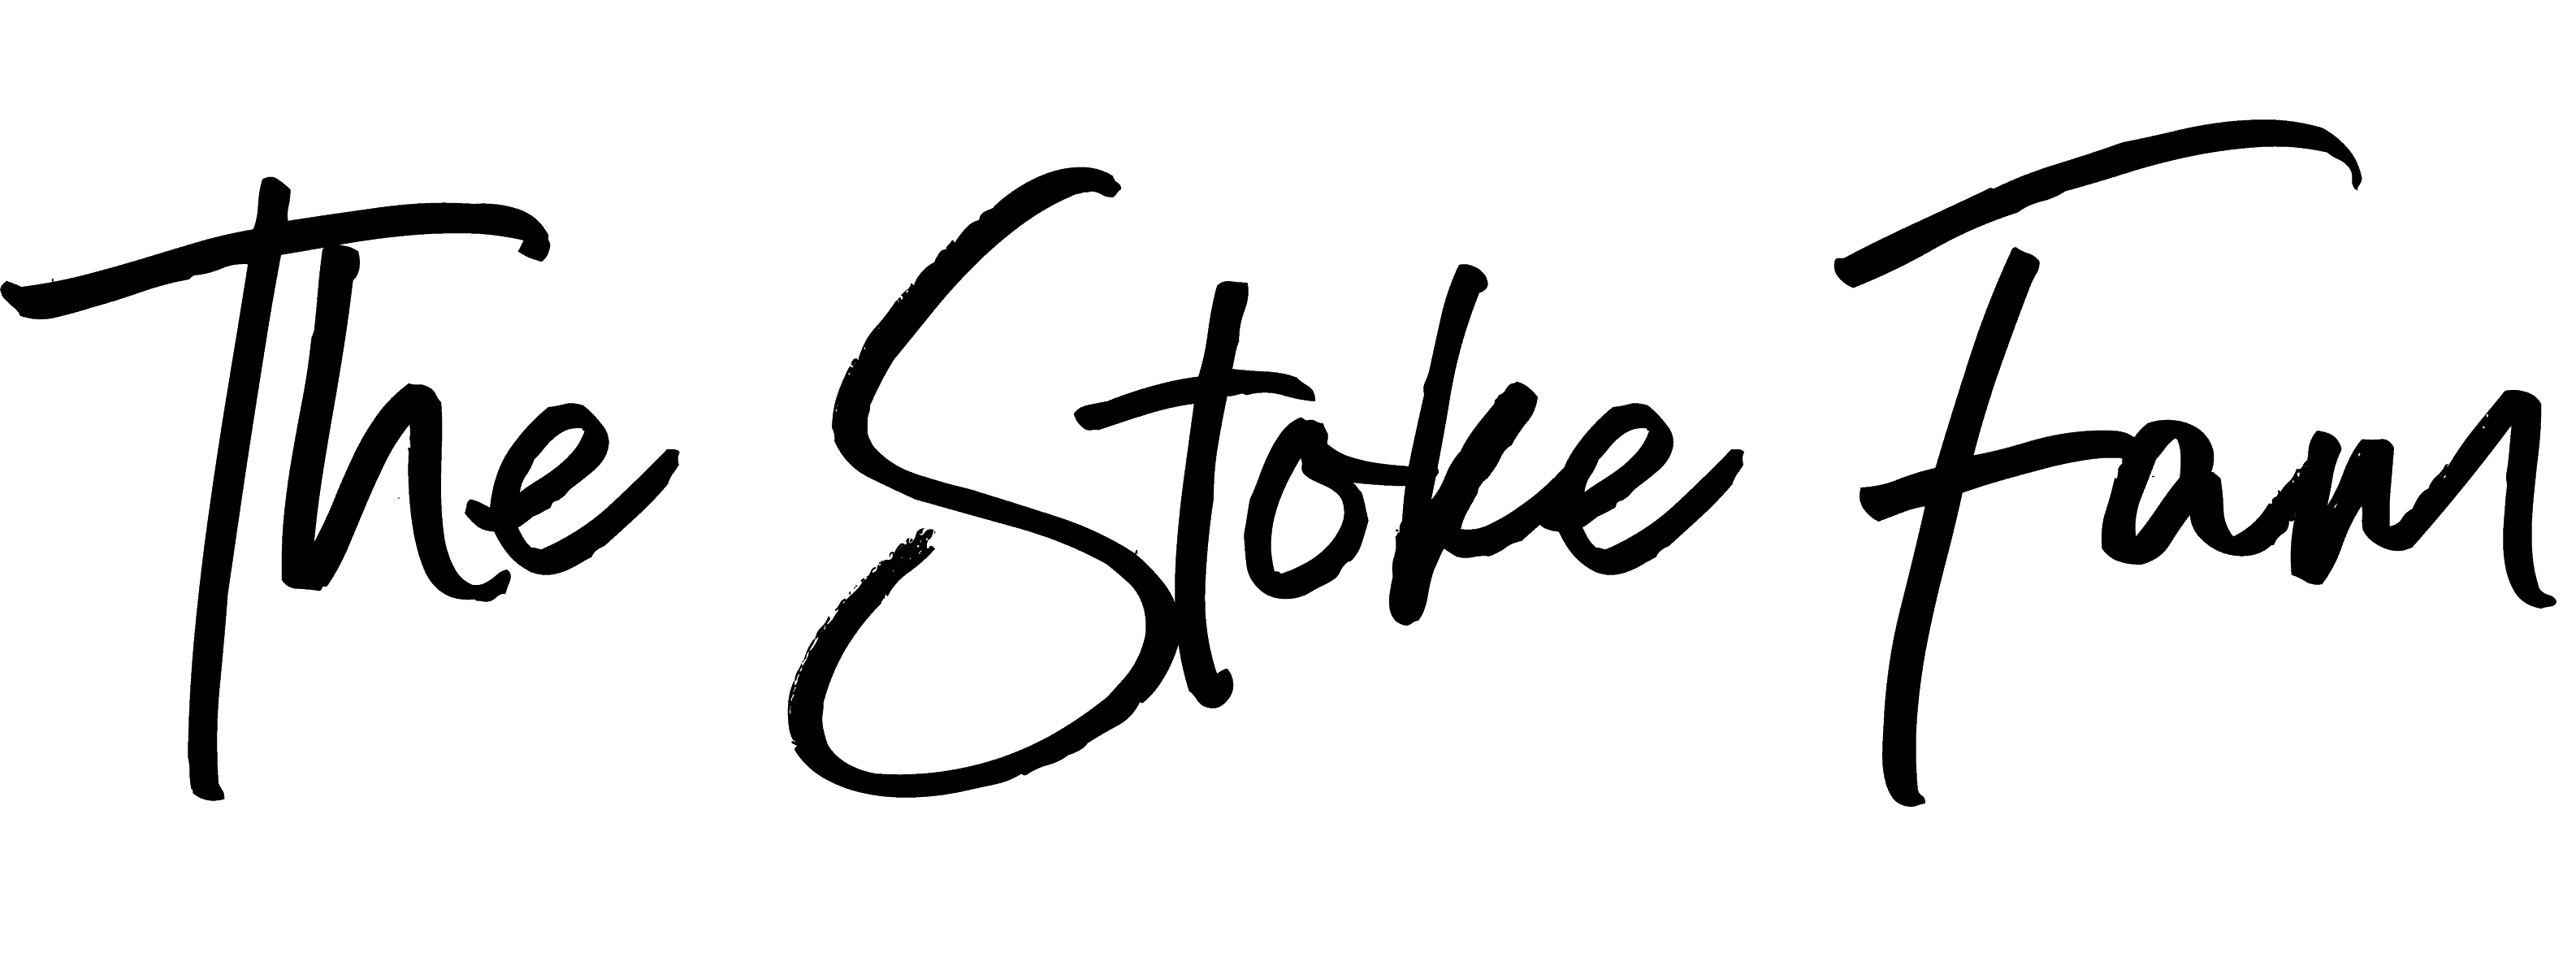 the stoke fam logo simple